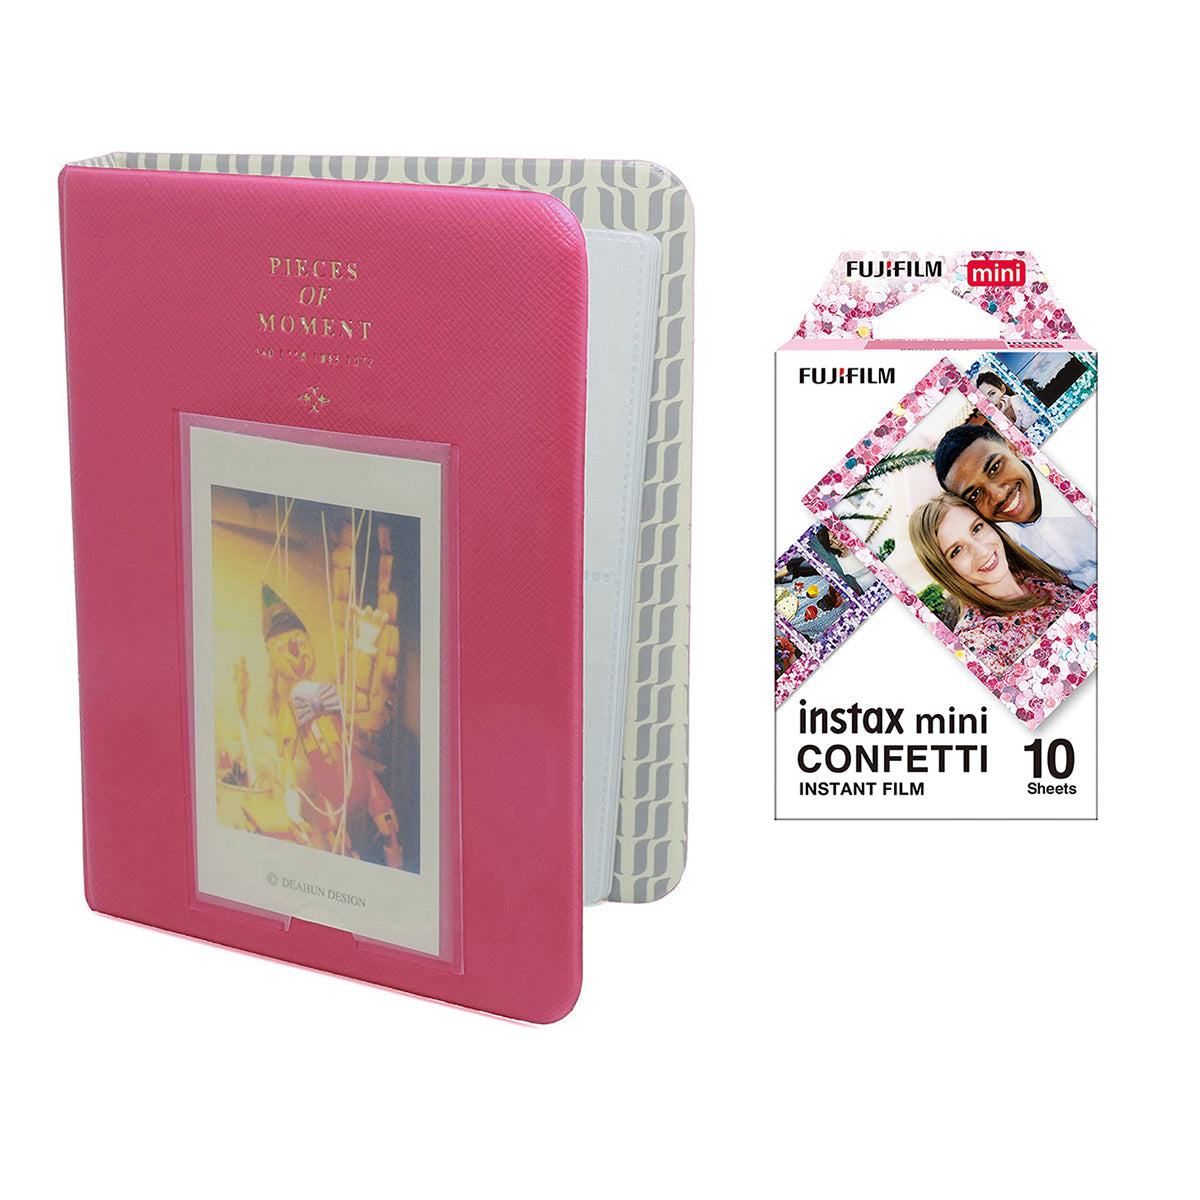 Fujifilm Instax Mini 10X1 confetti Instant Film with Instax Time Photo Album 64 Sheets Rose red